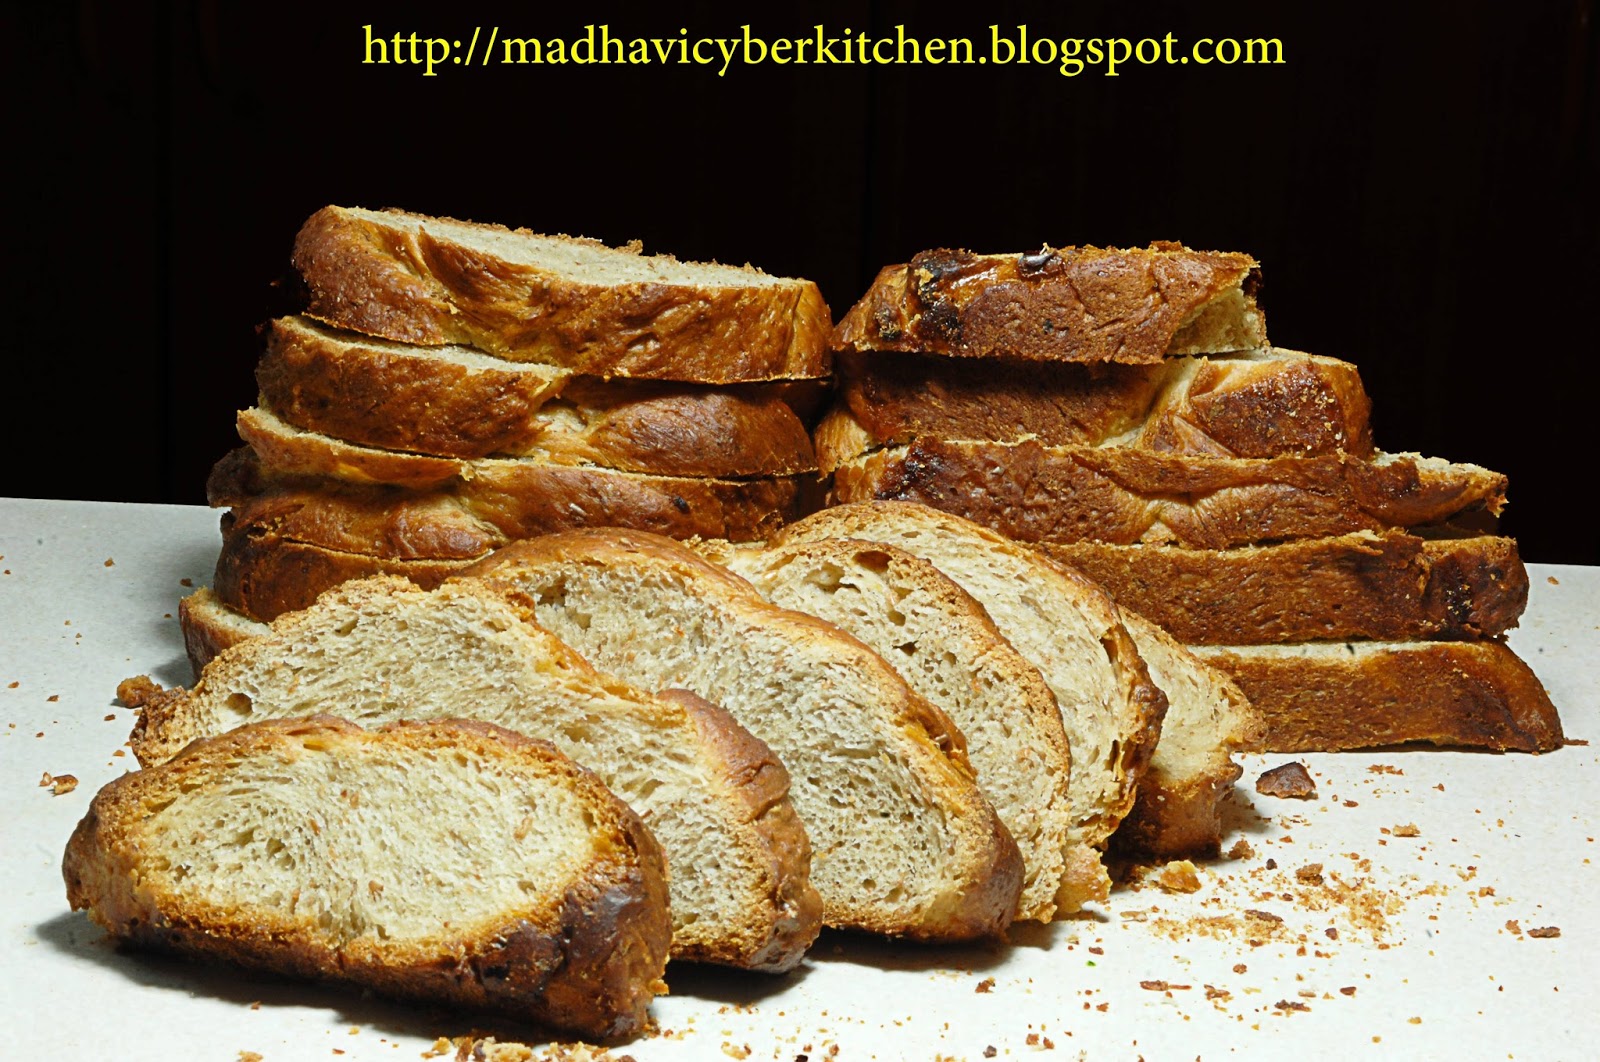 Madhavi's Cyber Kitchen: Vegan Banana Bread